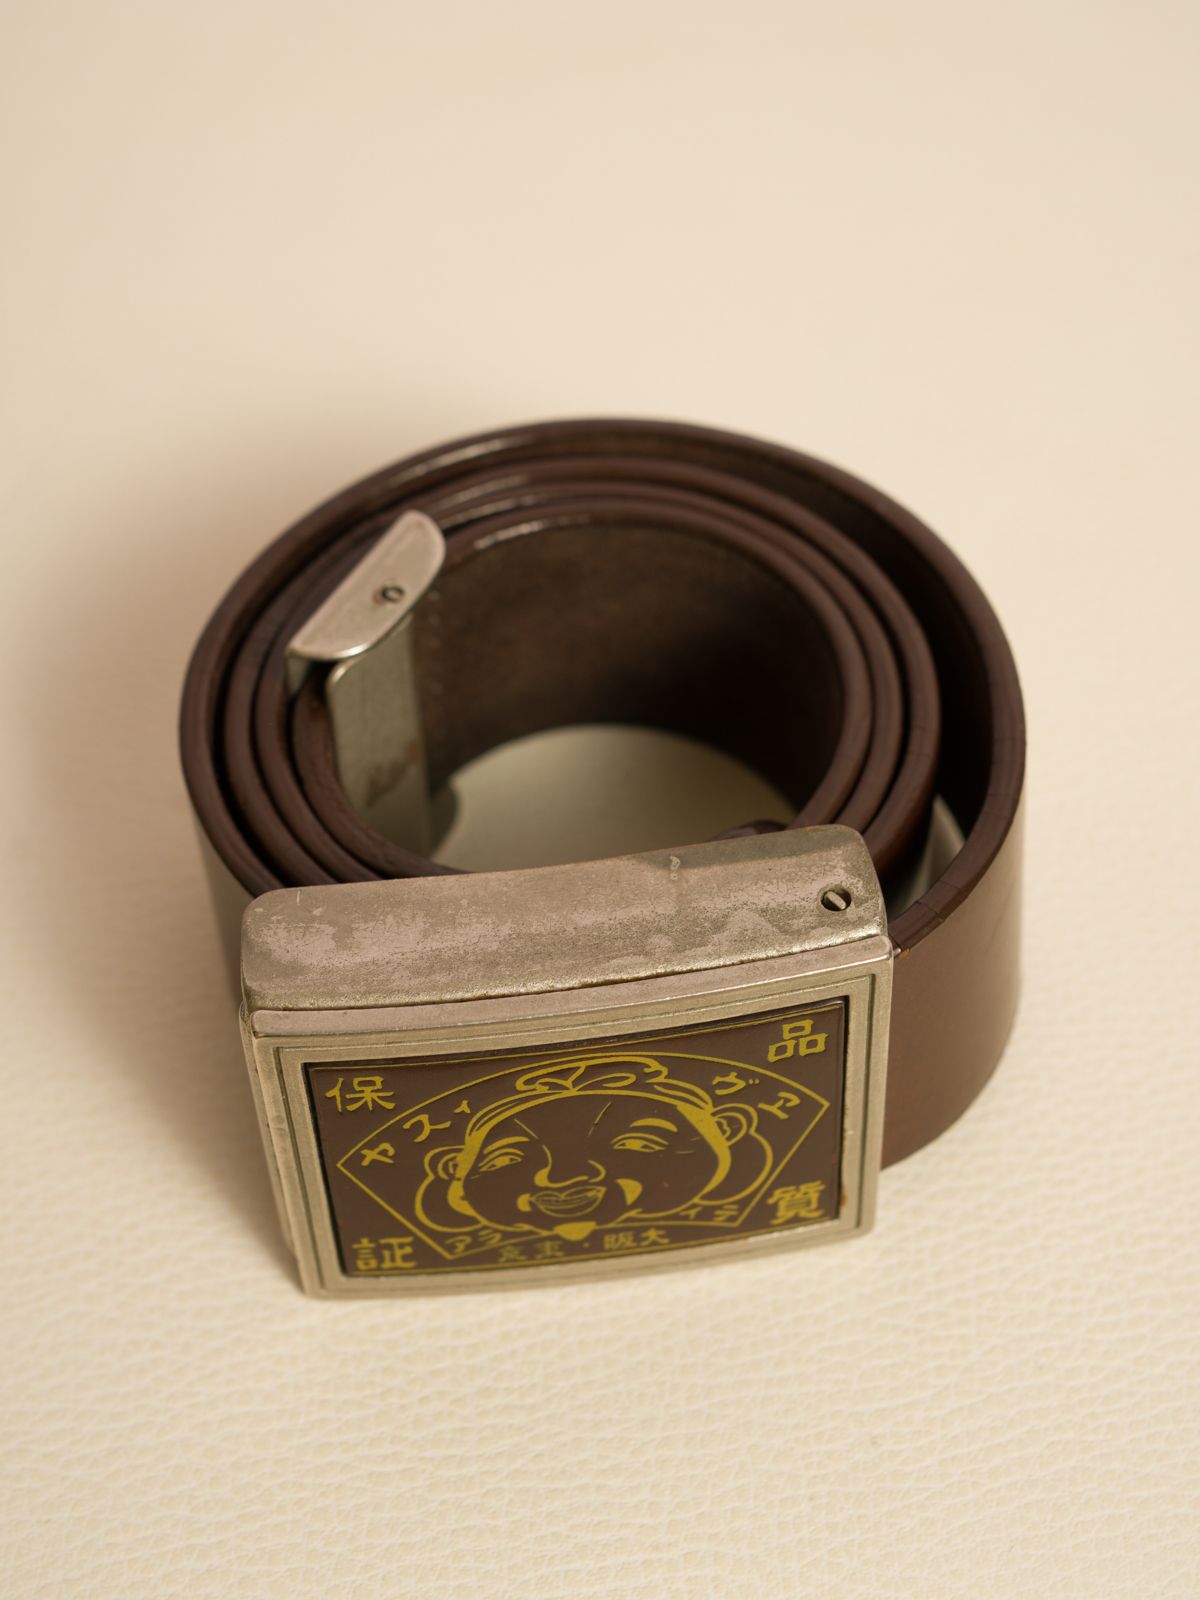 Evisu Unique Ebisu face brown leather belt Size ONE SIZE - 3 Preview